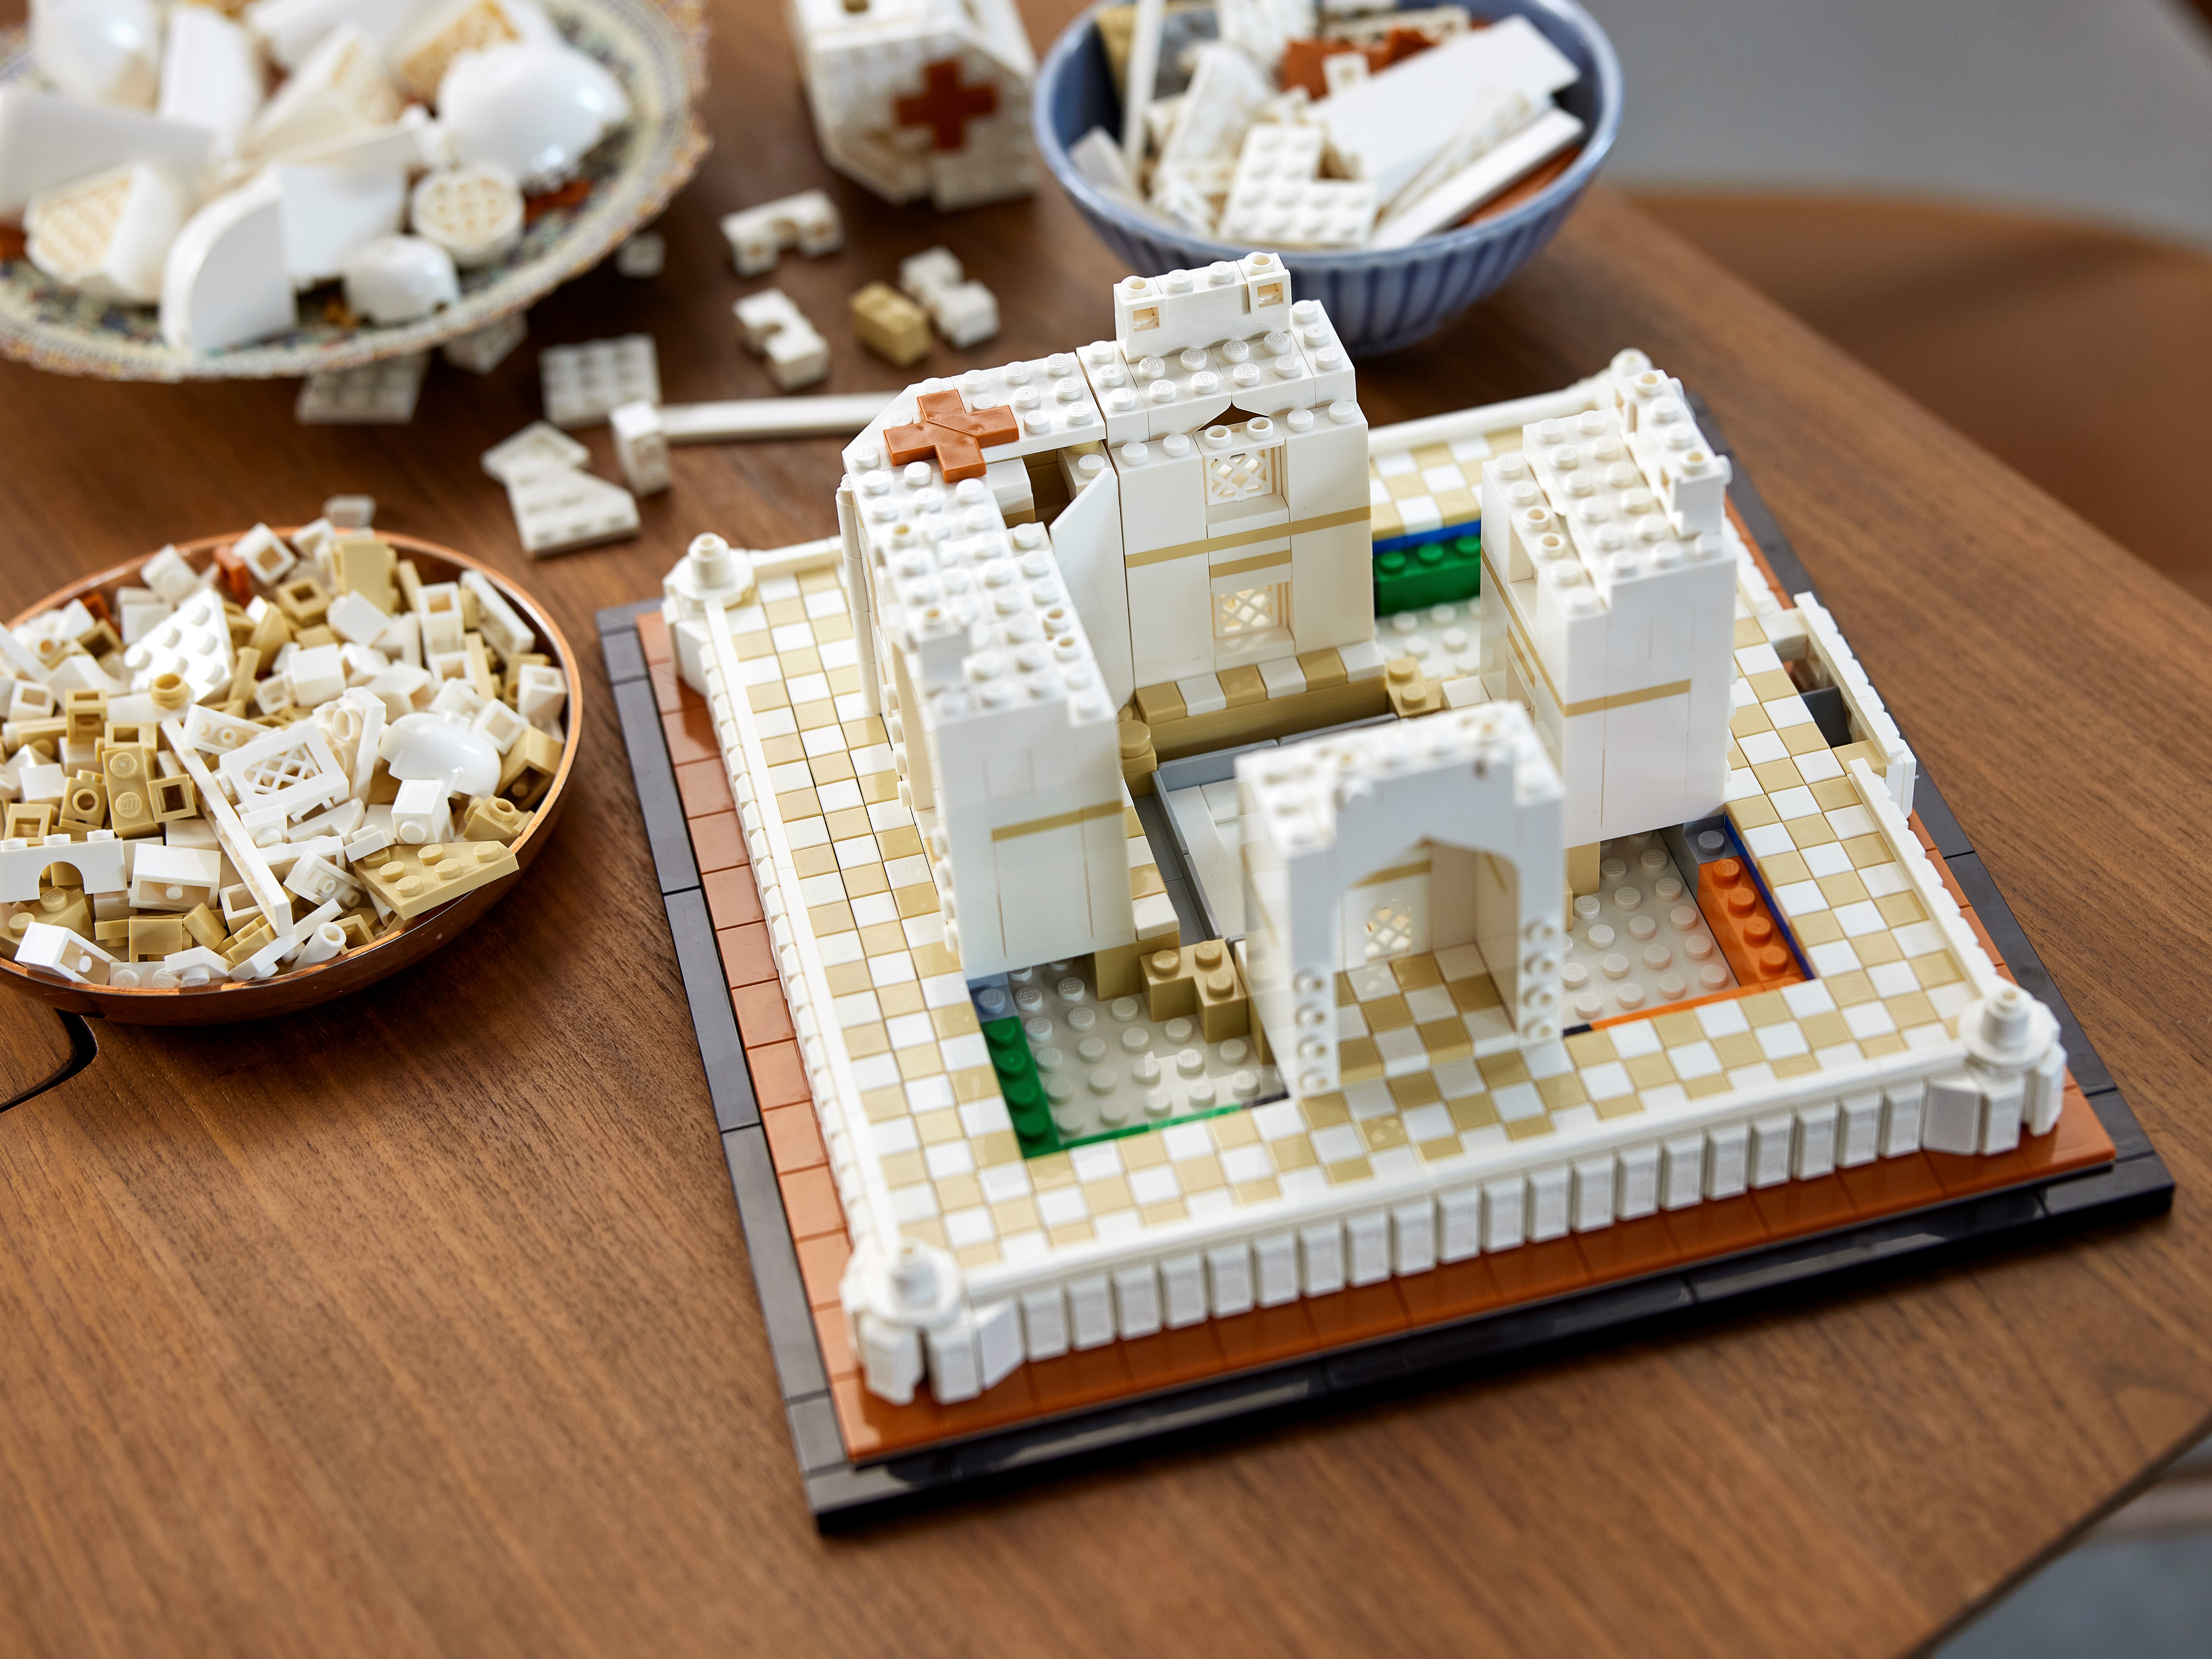 Building the new LEGO Taj Mahal 21056 